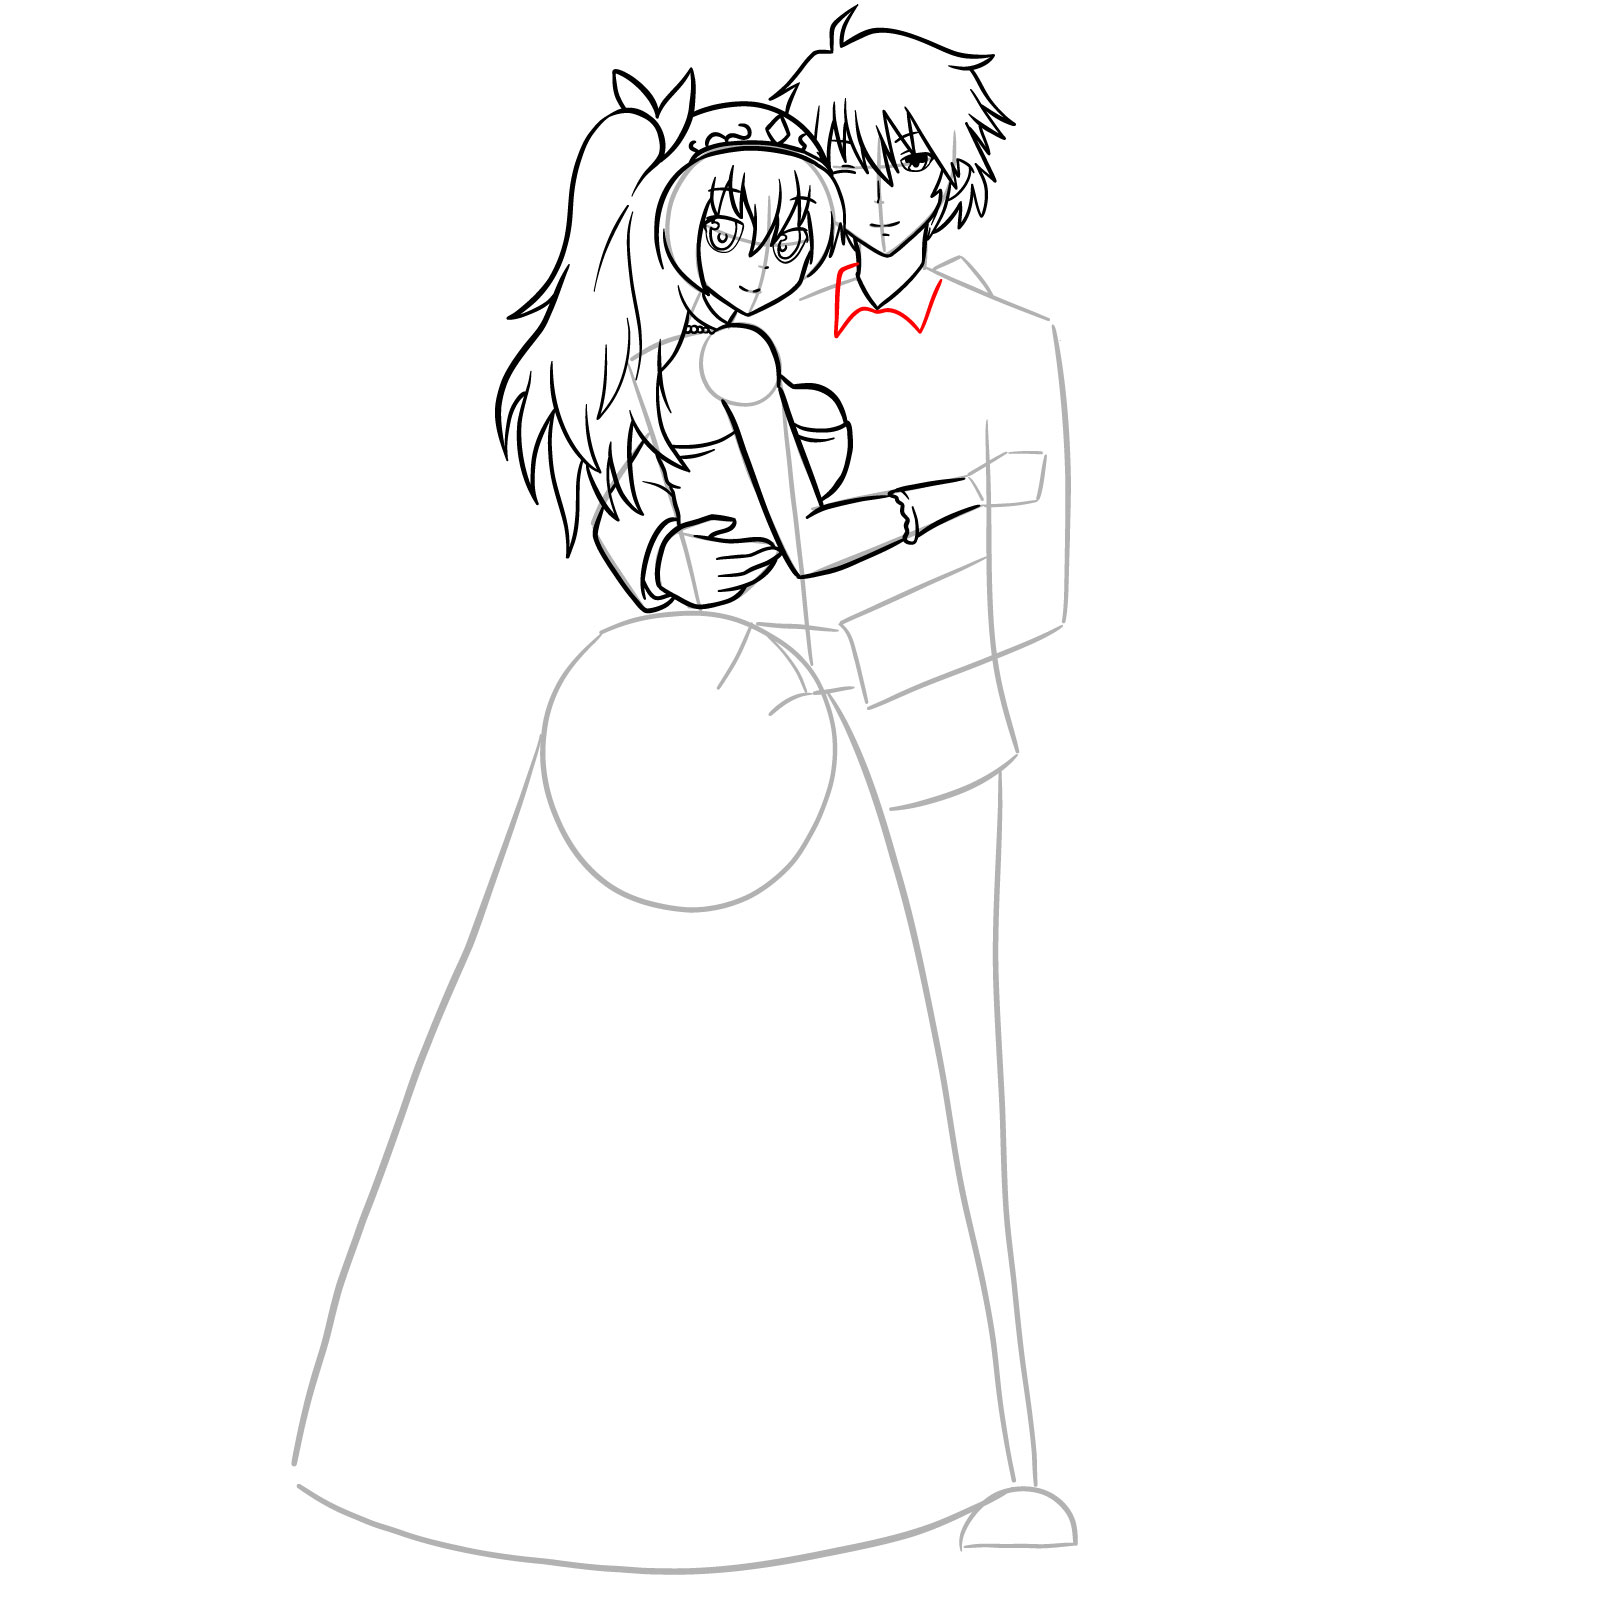 How to draw Ikki and Stella's wedding - step 34